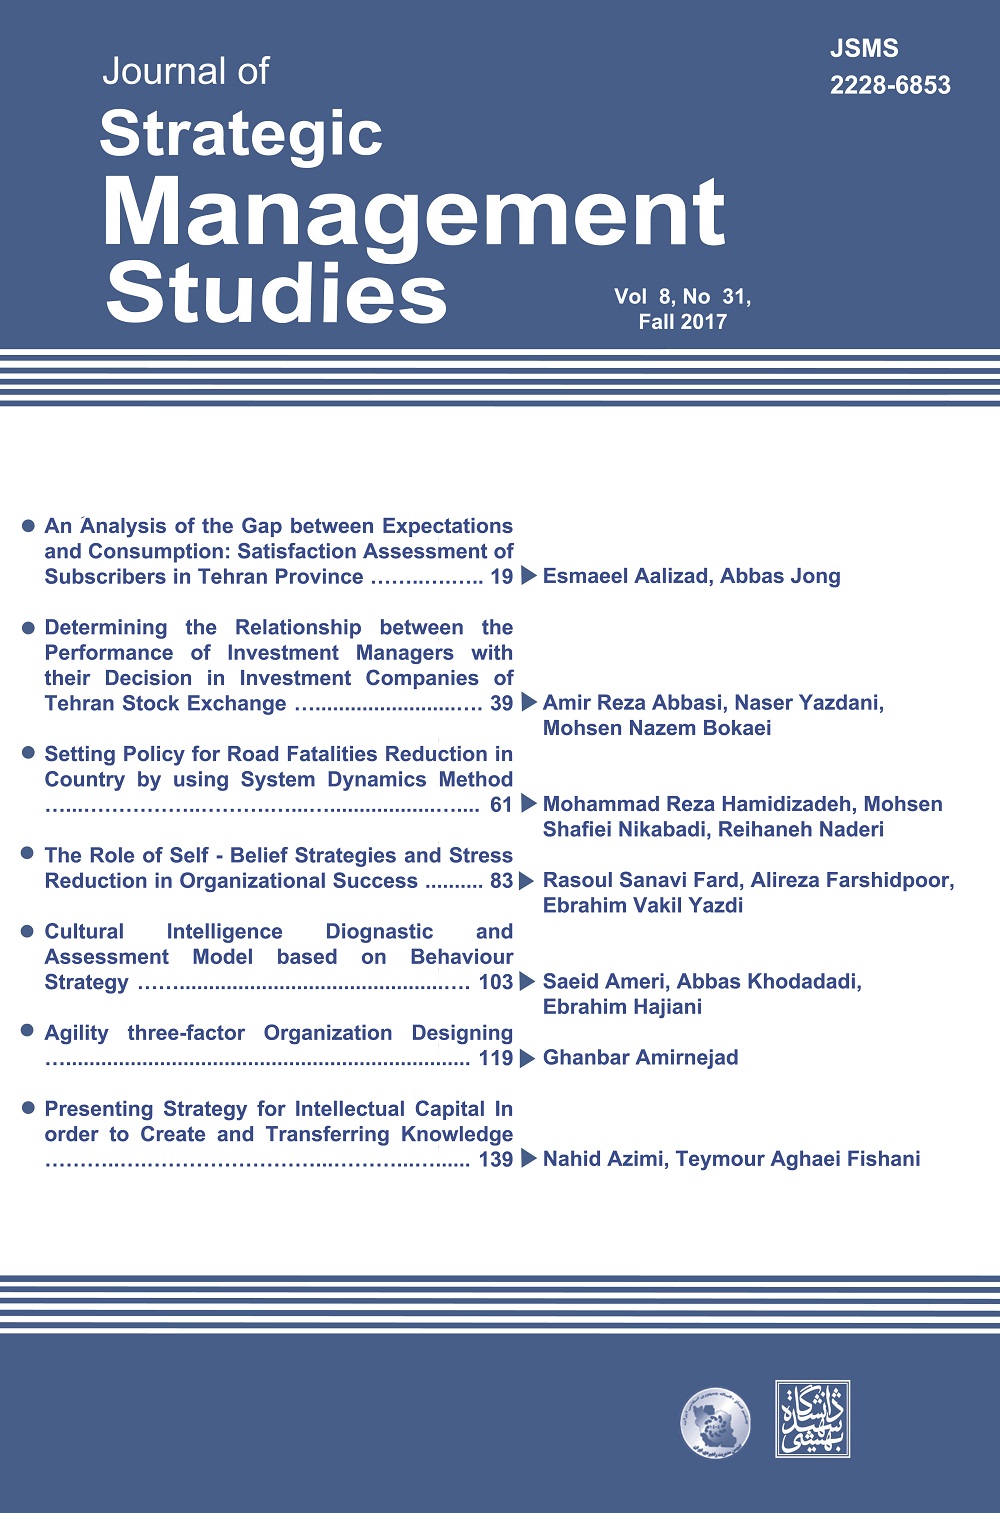 Journal of Strategic Management Studies